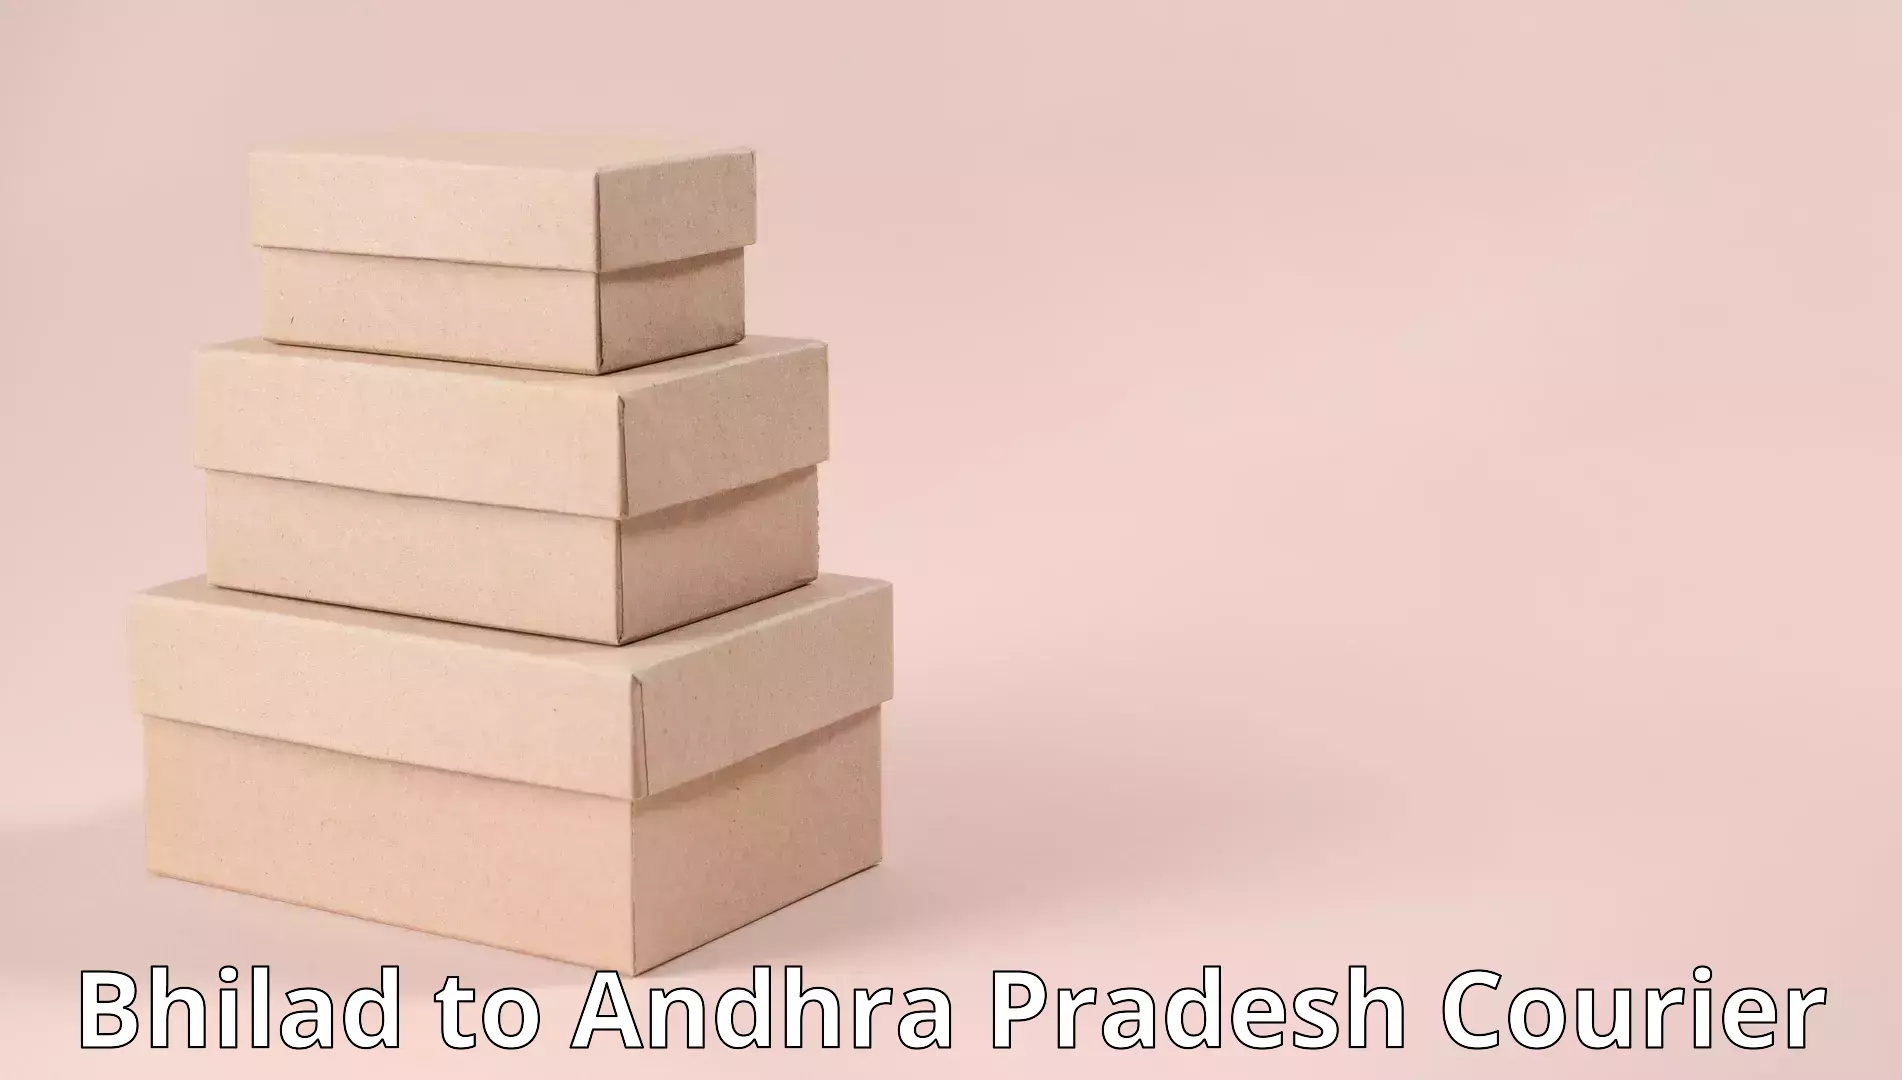 Hassle-free relocation Bhilad to Andhra Pradesh